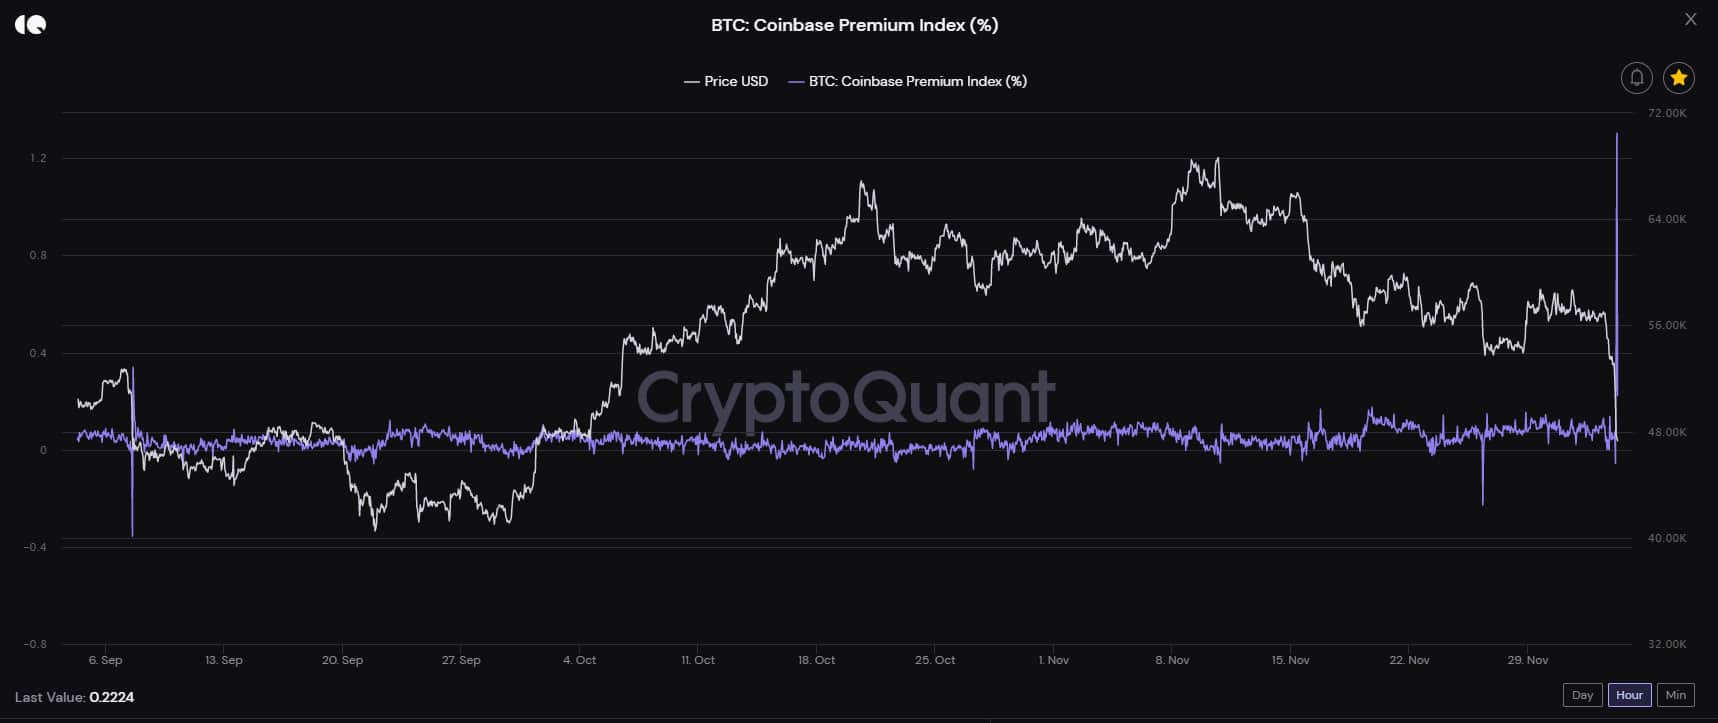 Bitcoin Premium on Coinbase. Source: CryptoQuant